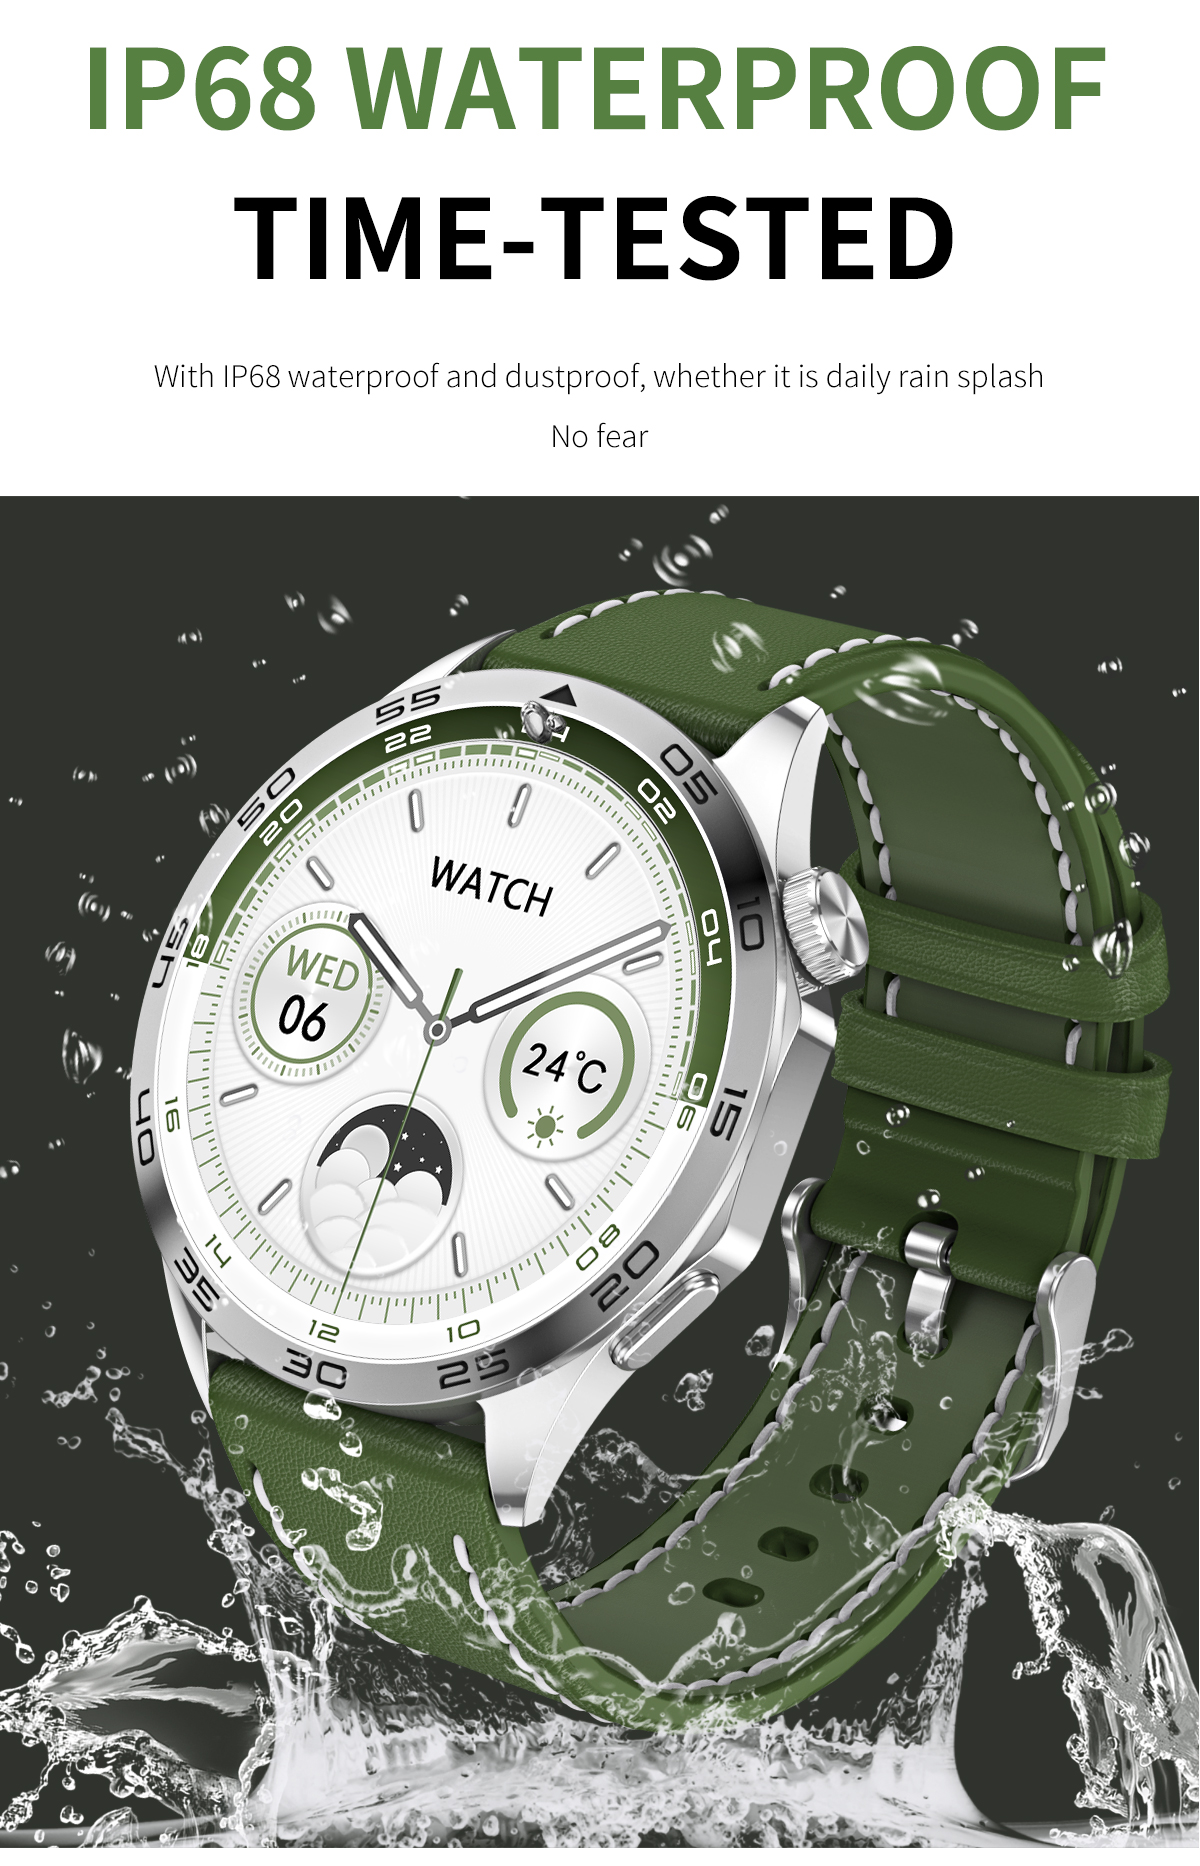 Grün BT-Anruf MIRUX Tracker NFC Smartwatch Fitness Silikon, GT4Gr